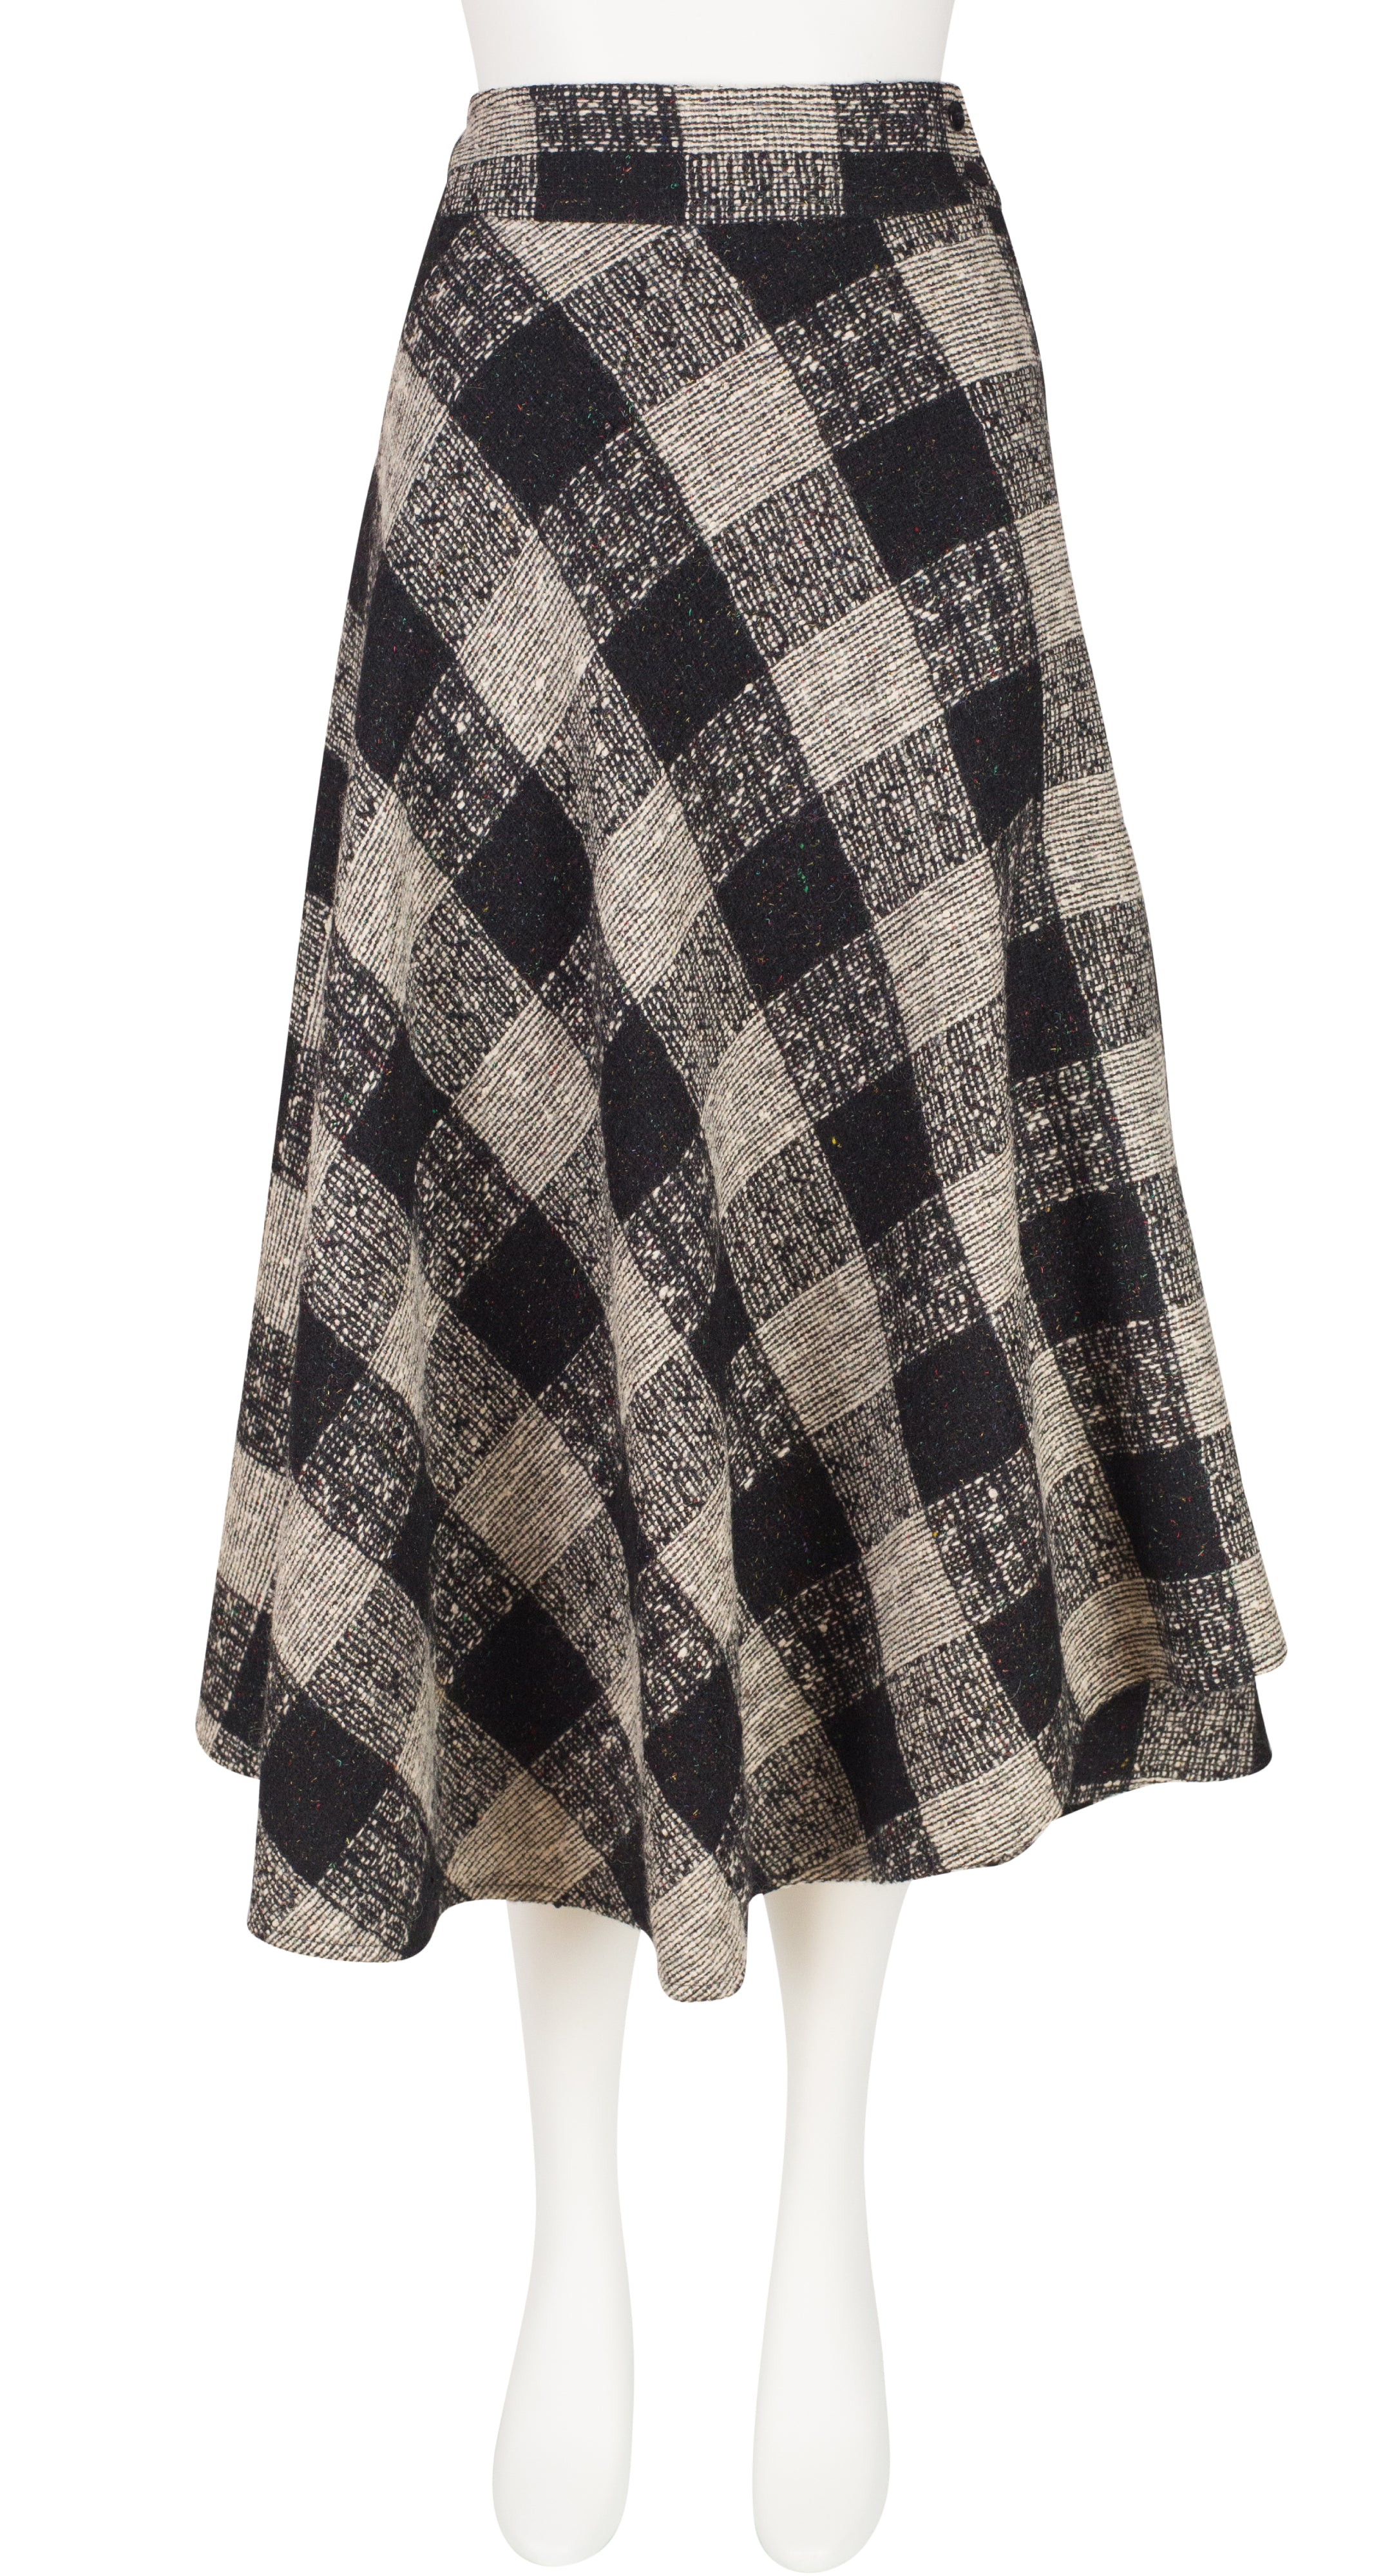 1980s Plaid Wool Tweed High-Waisted Skirt